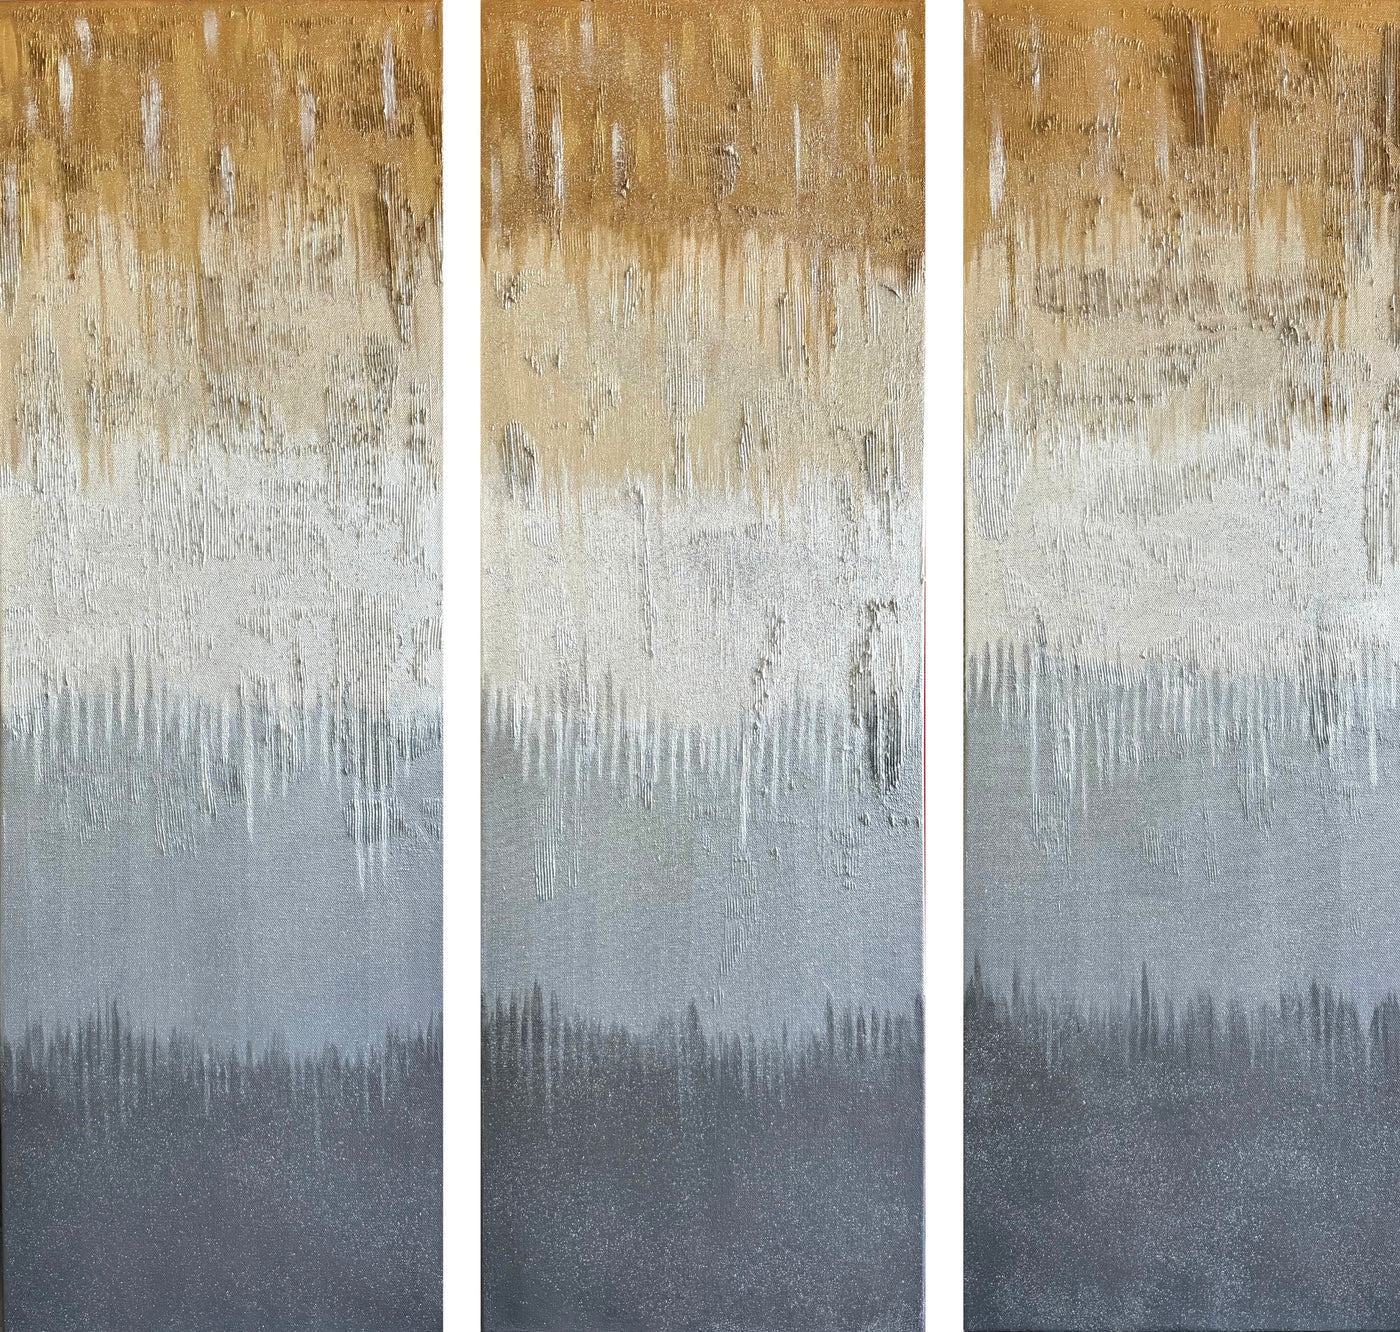 Immersive Reflection Triptych - 36”W x 36”H